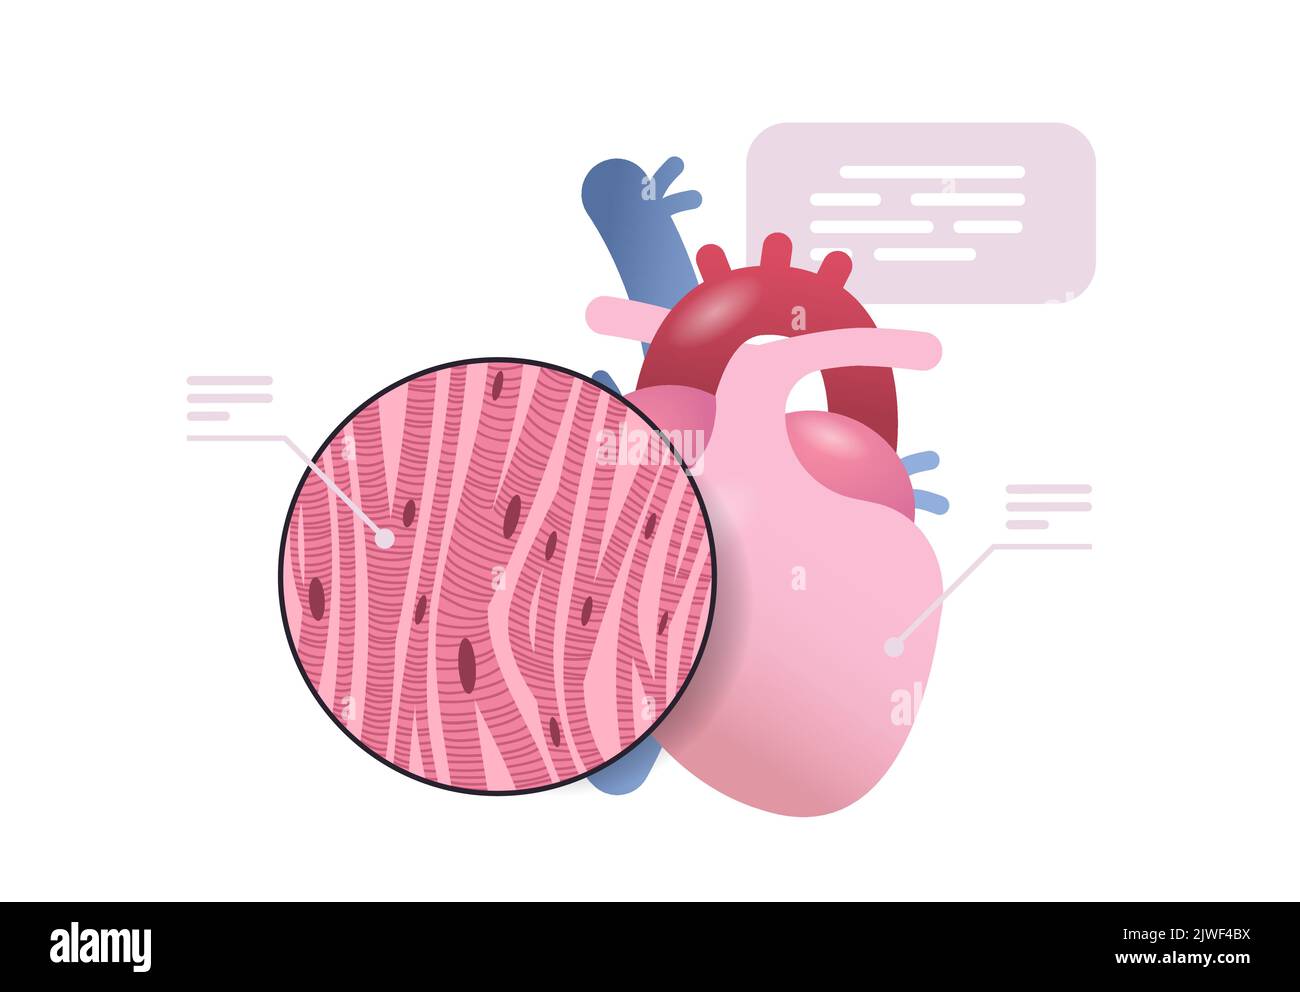 detailed explanation anatomical heart structure human body internal organ anatomy medicine healthcare concept Stock Vector